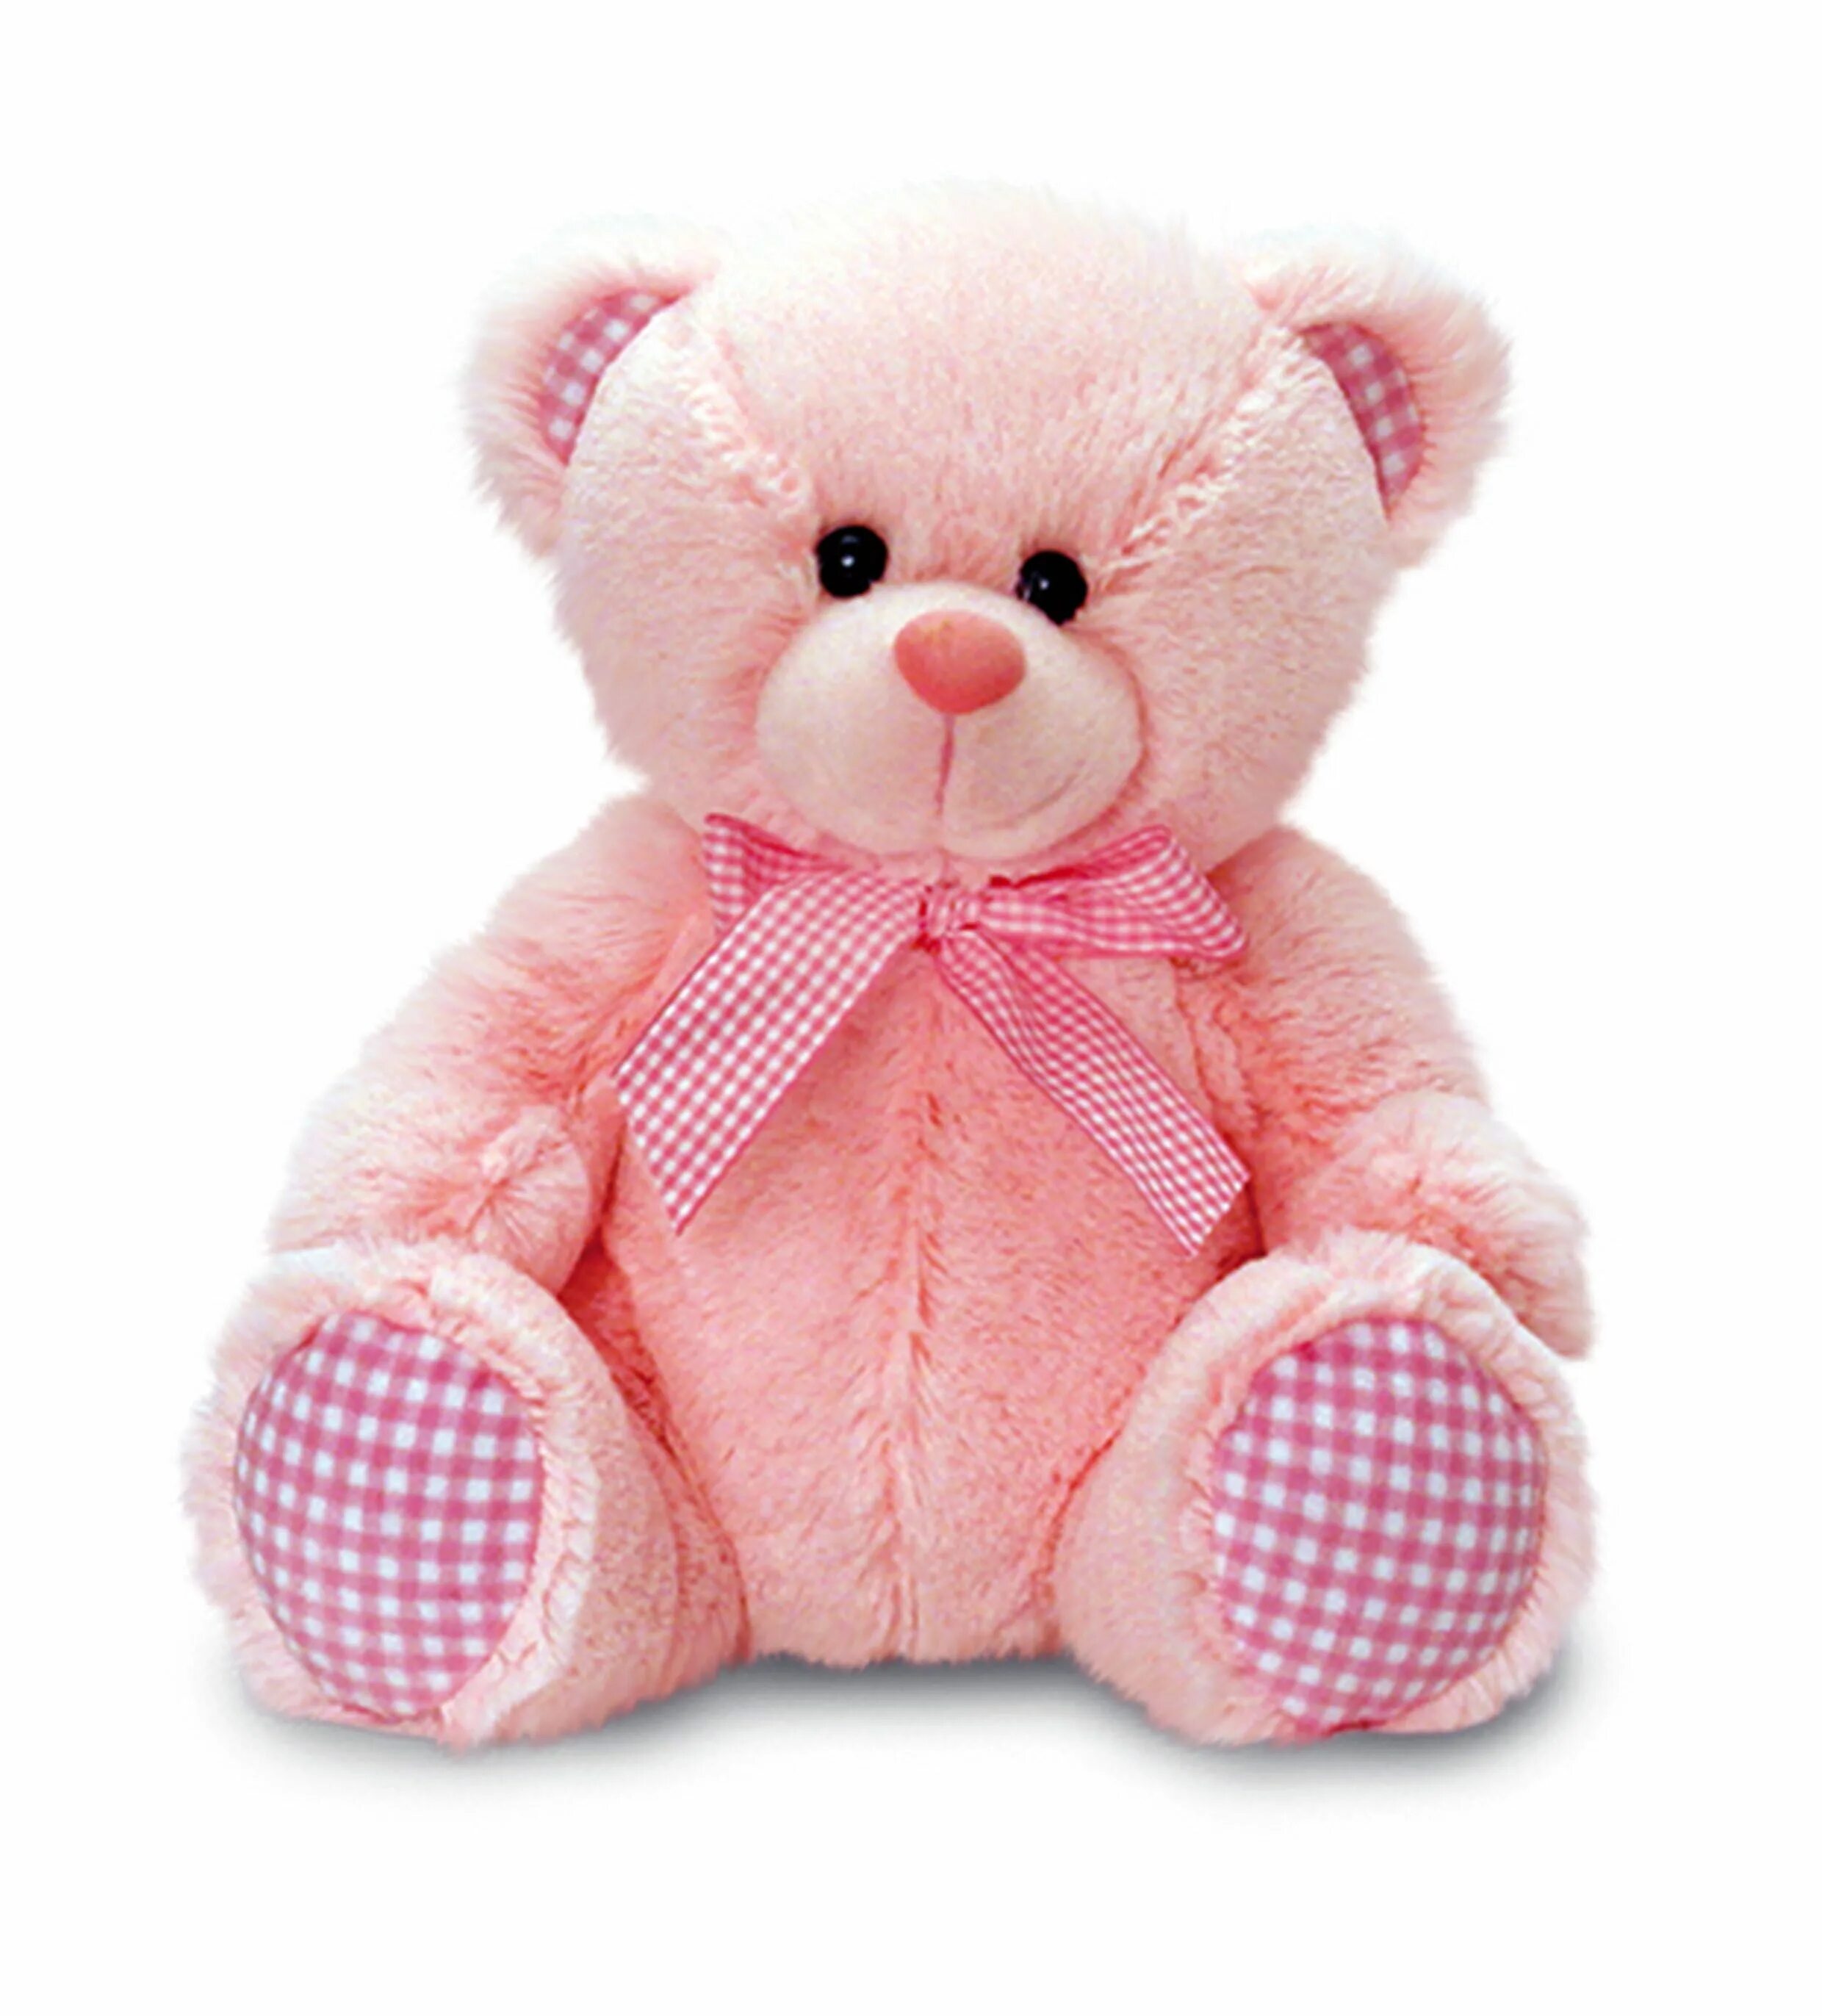 Розовый мишка игрушка. Keel Toys медведь. Пинк Беар. Розовый медведь игрушка. Розовые игрушки.